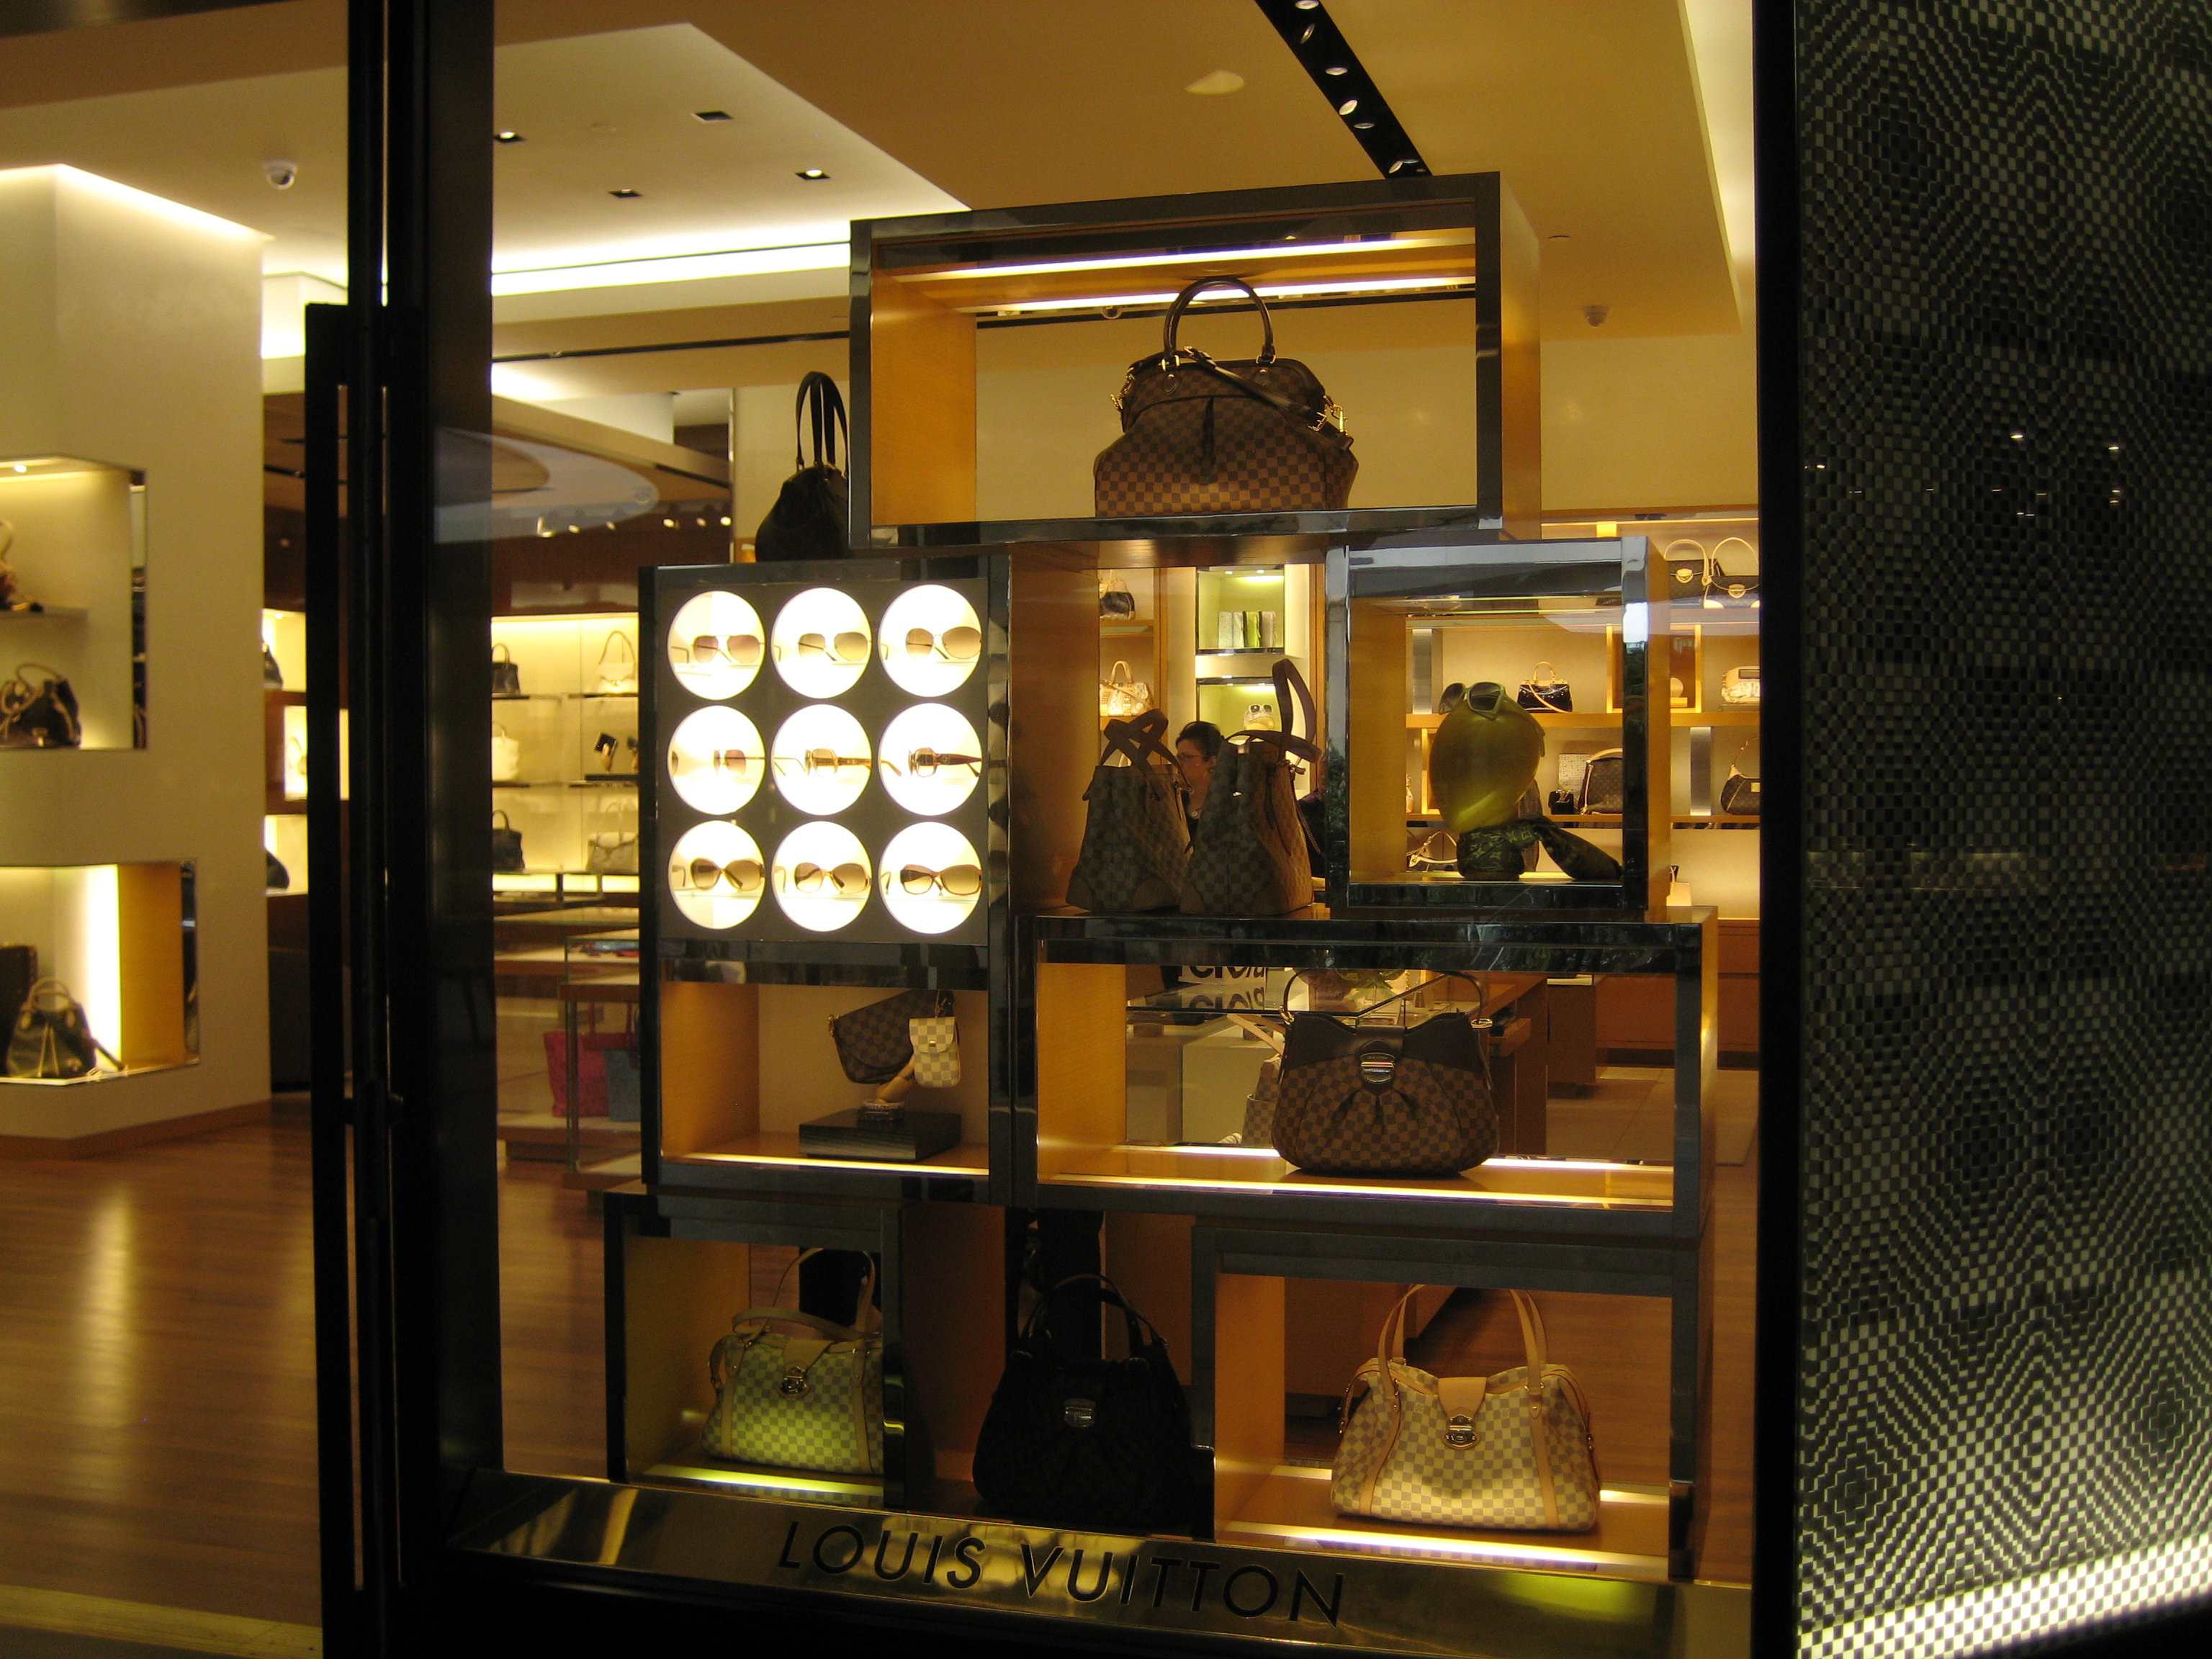 Louis Vuitton At The Galleria In Edina | SEMA Data Co-op